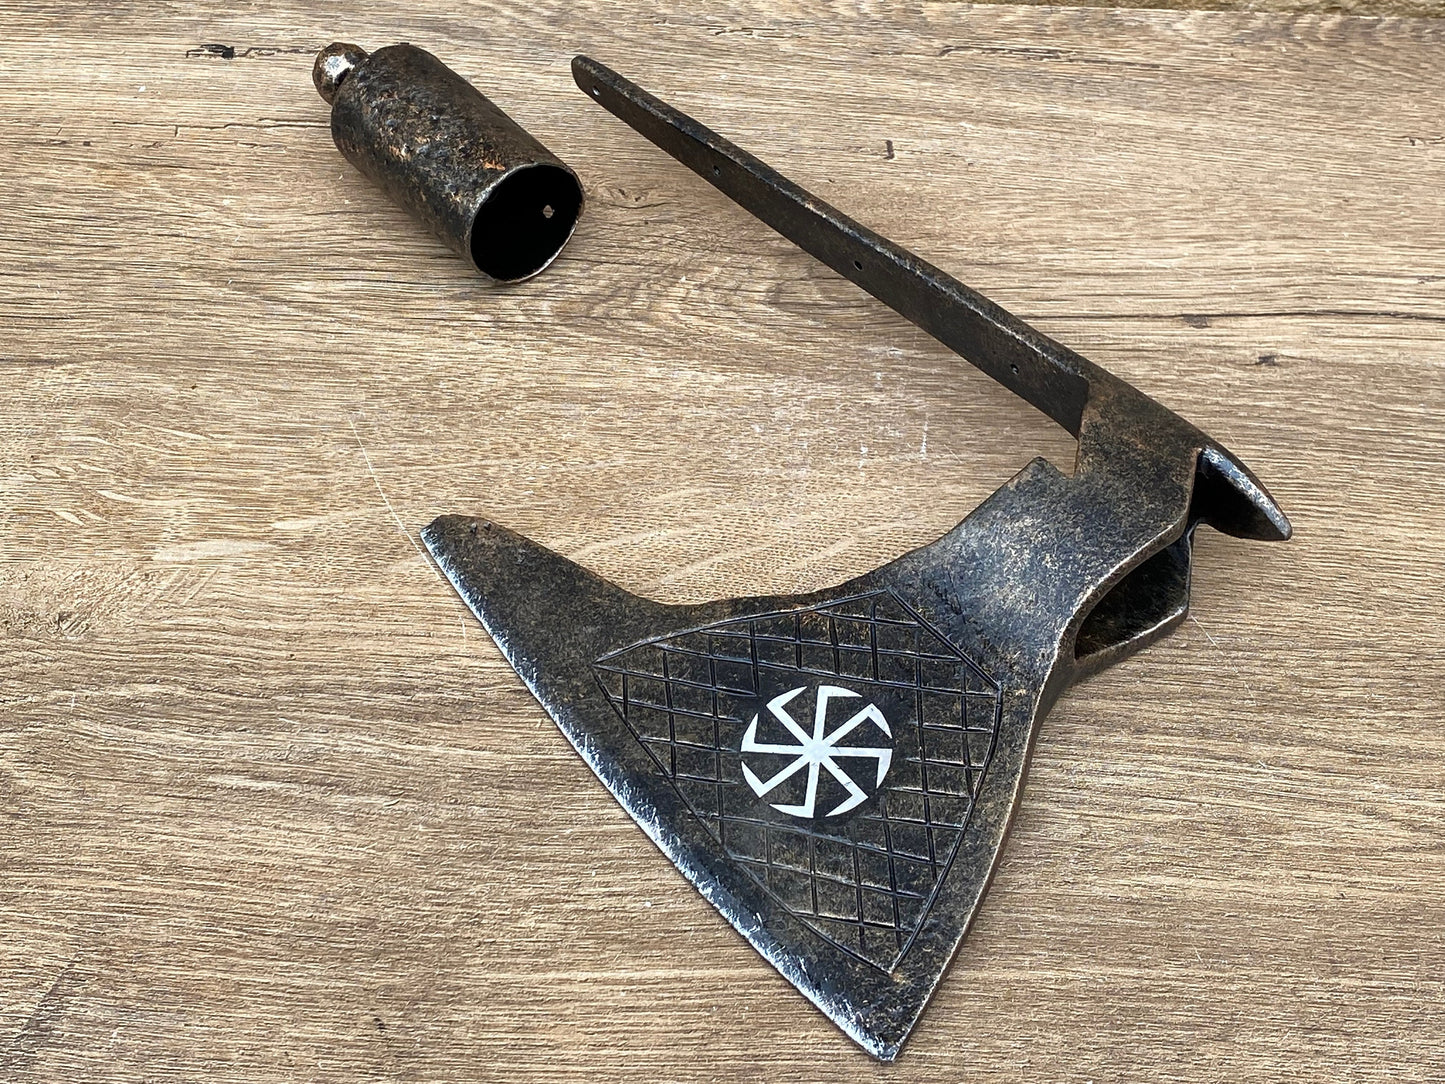 Axe kit, medieval, DIY kit, viking axe, craft kit, viking, do it yourself, diy workshop,do it yourself gift, birthday, Christmas, axe, spear